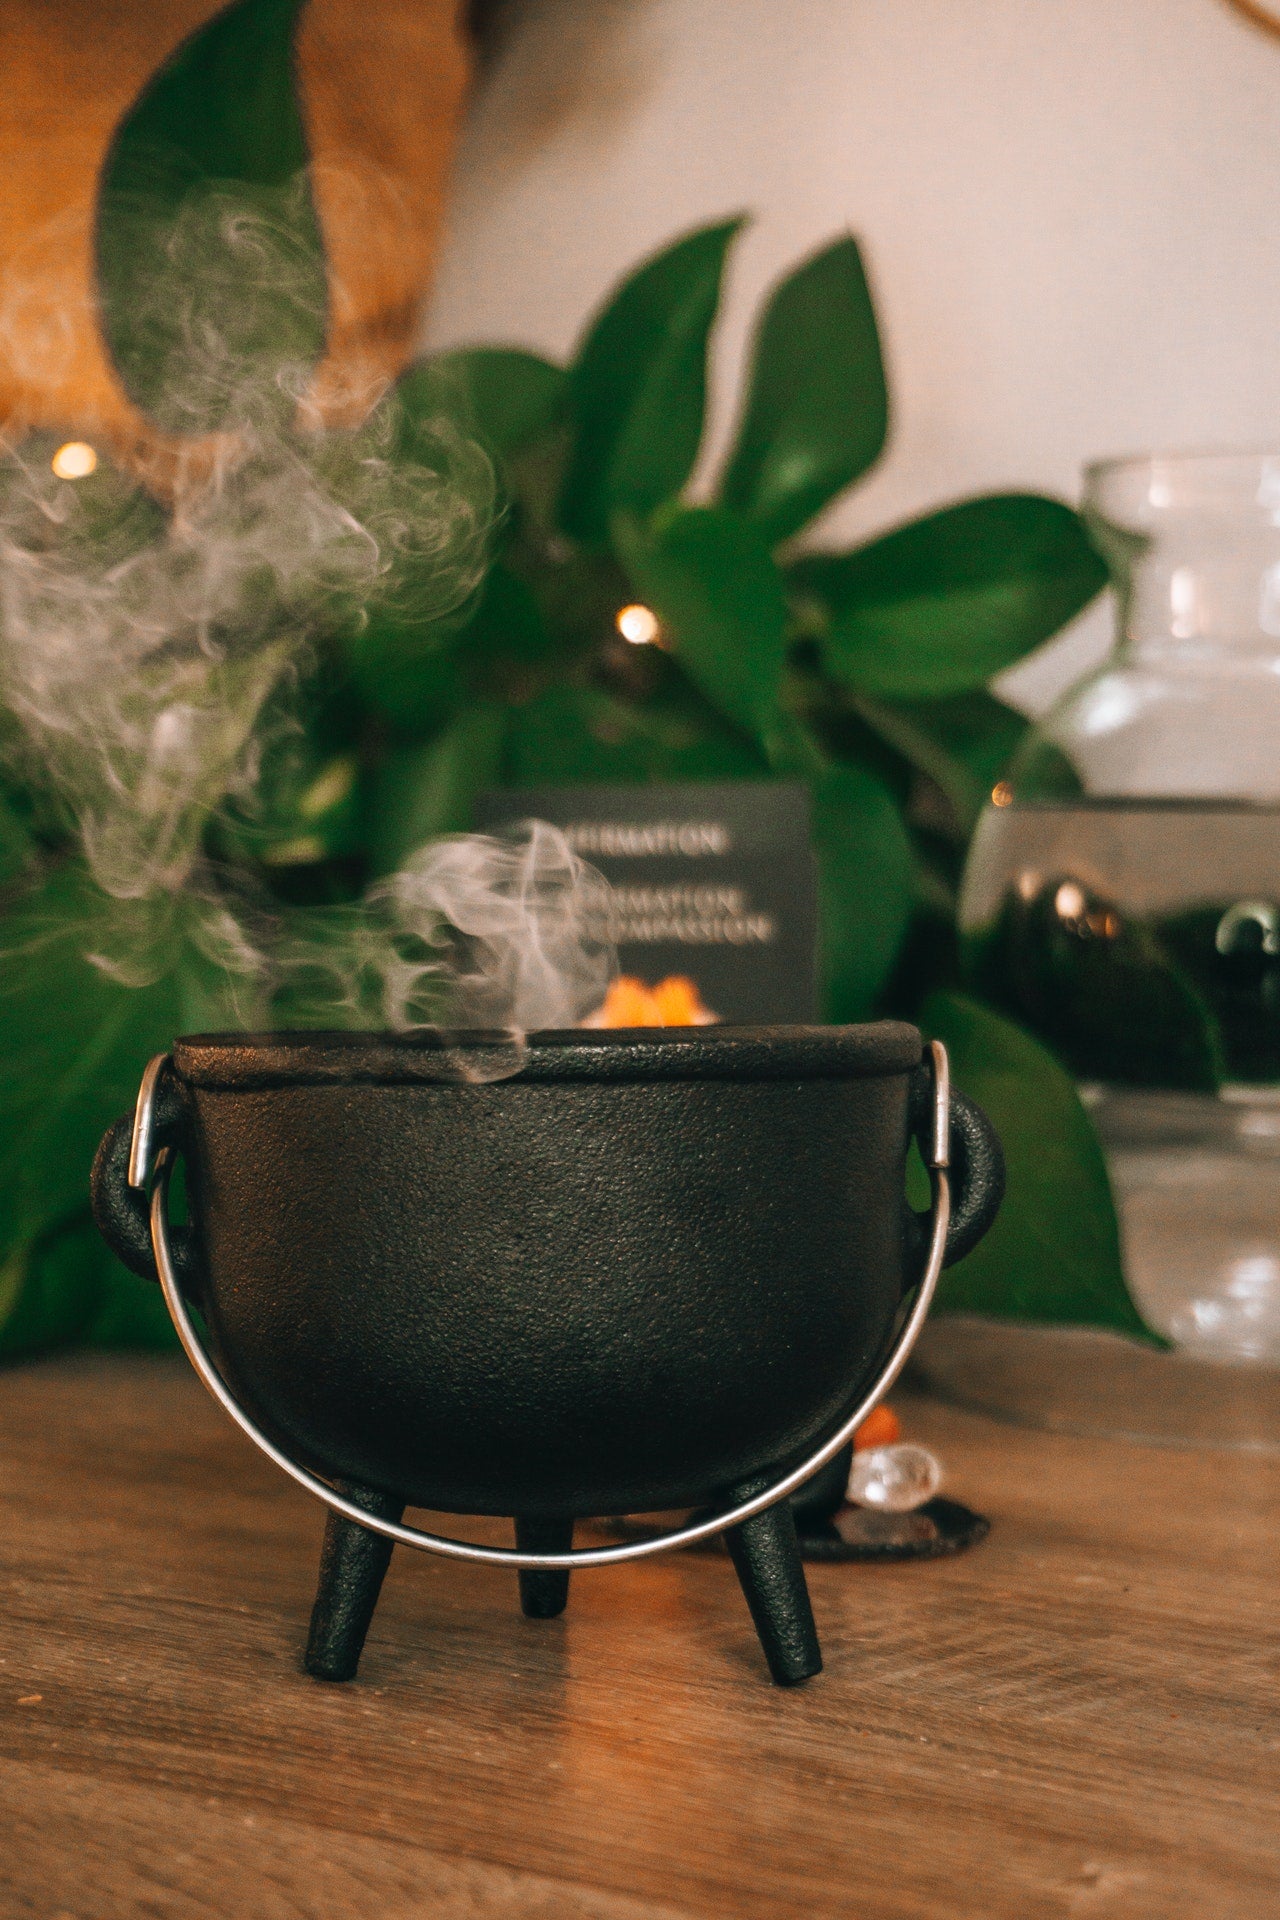 Smoke rising from a small cauldron